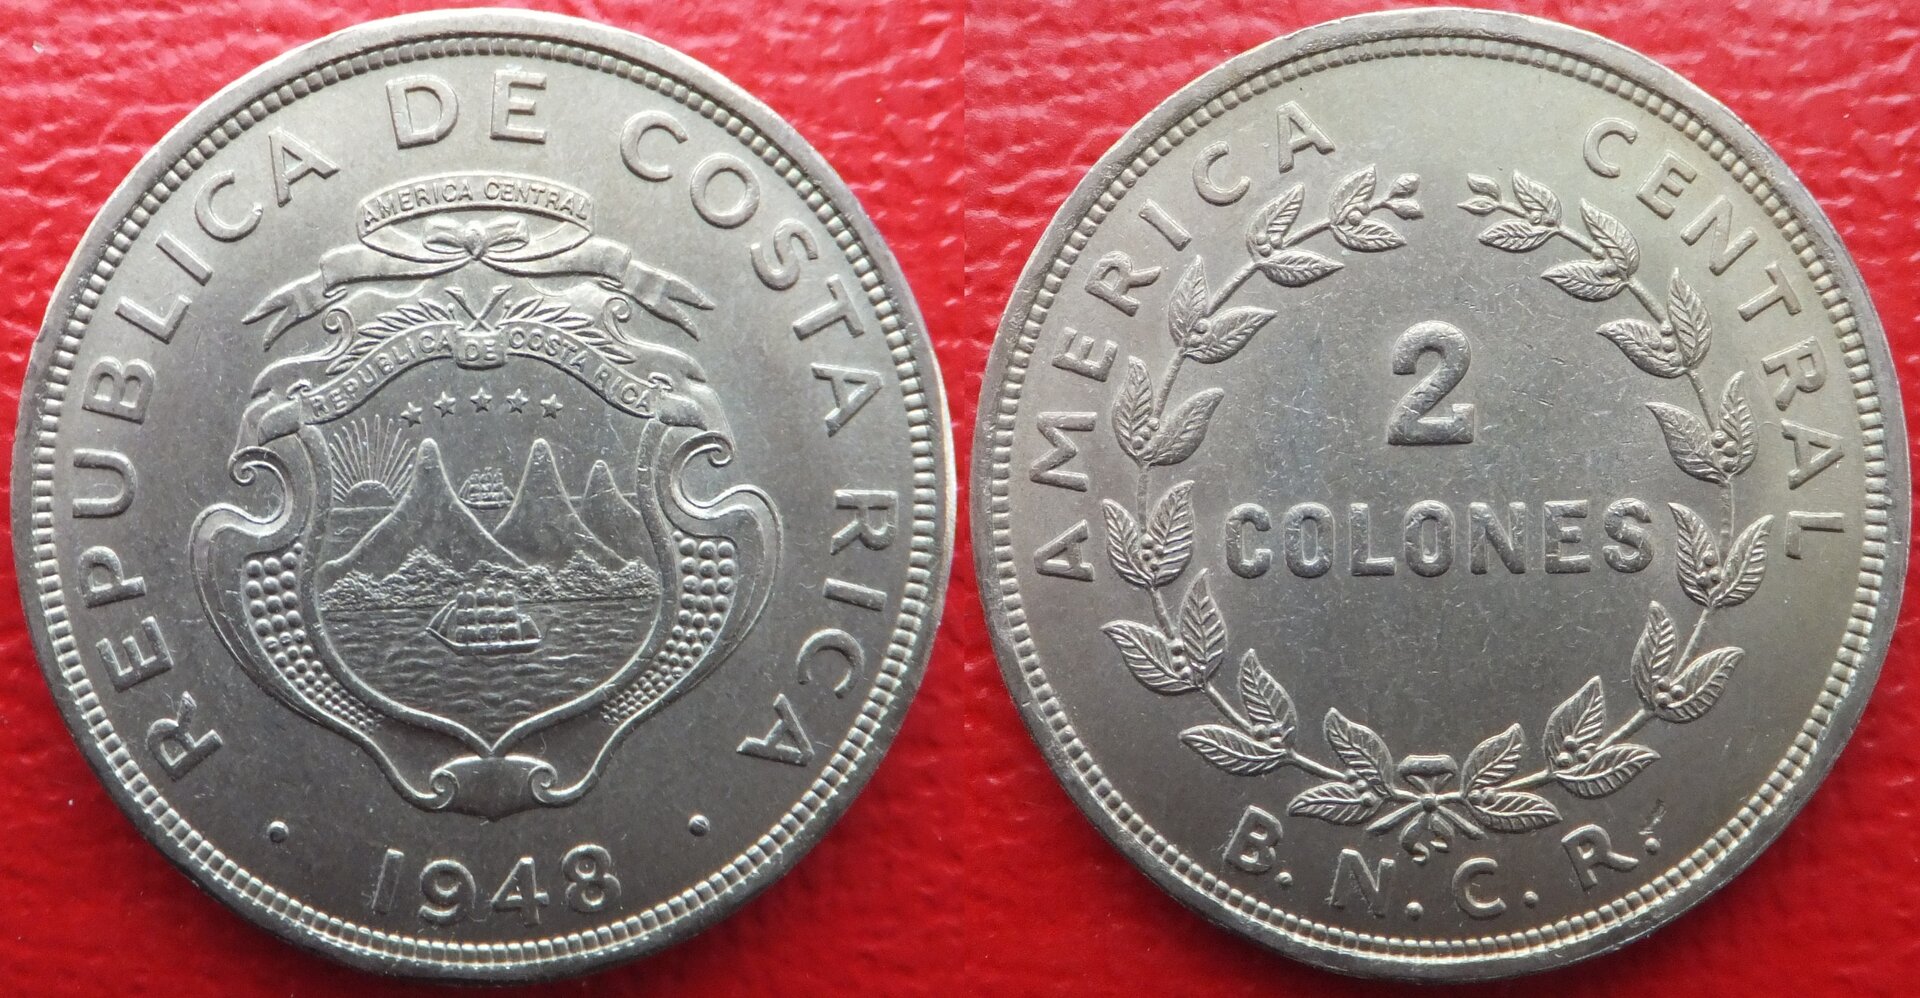 Costa Rica 2 colones 1948 (3).jpg